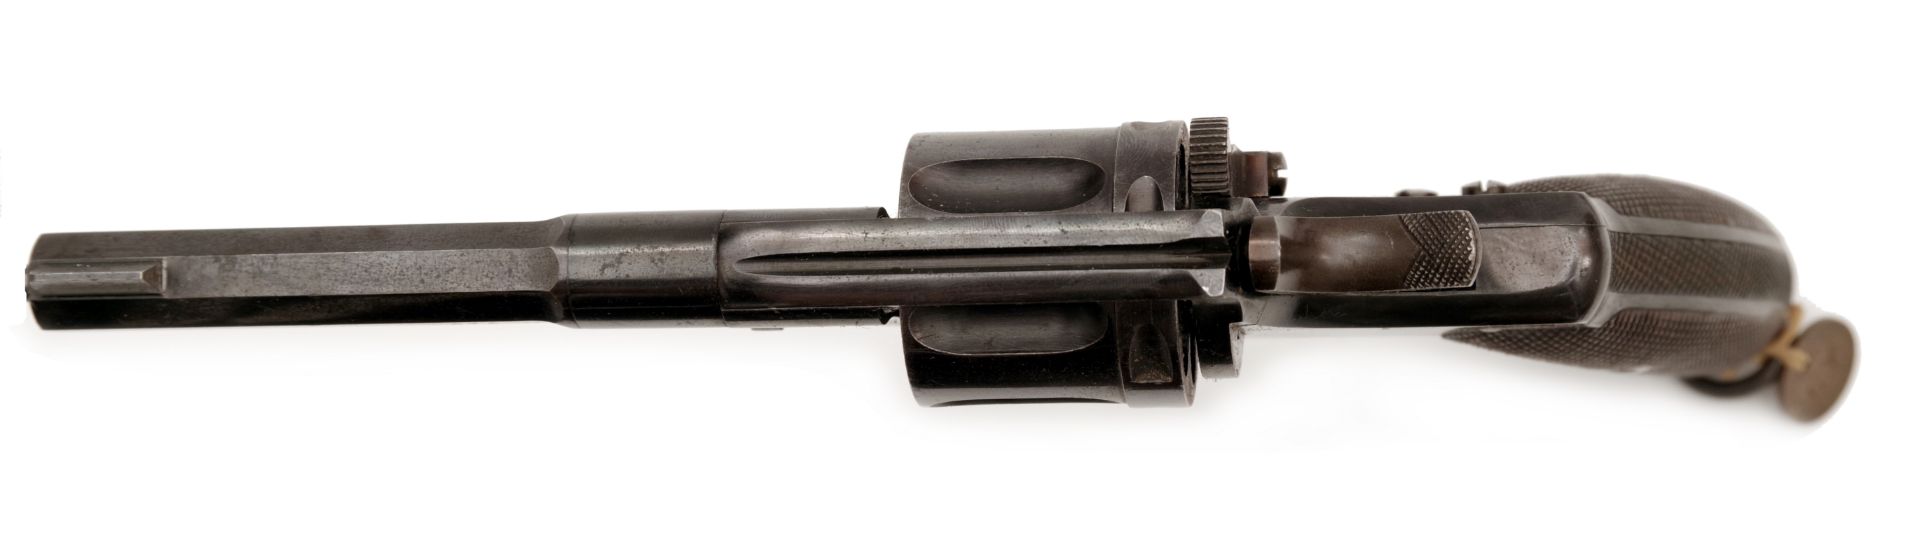 A Swedish Nagant Model 1887 DA Service Revolver - Image 4 of 4